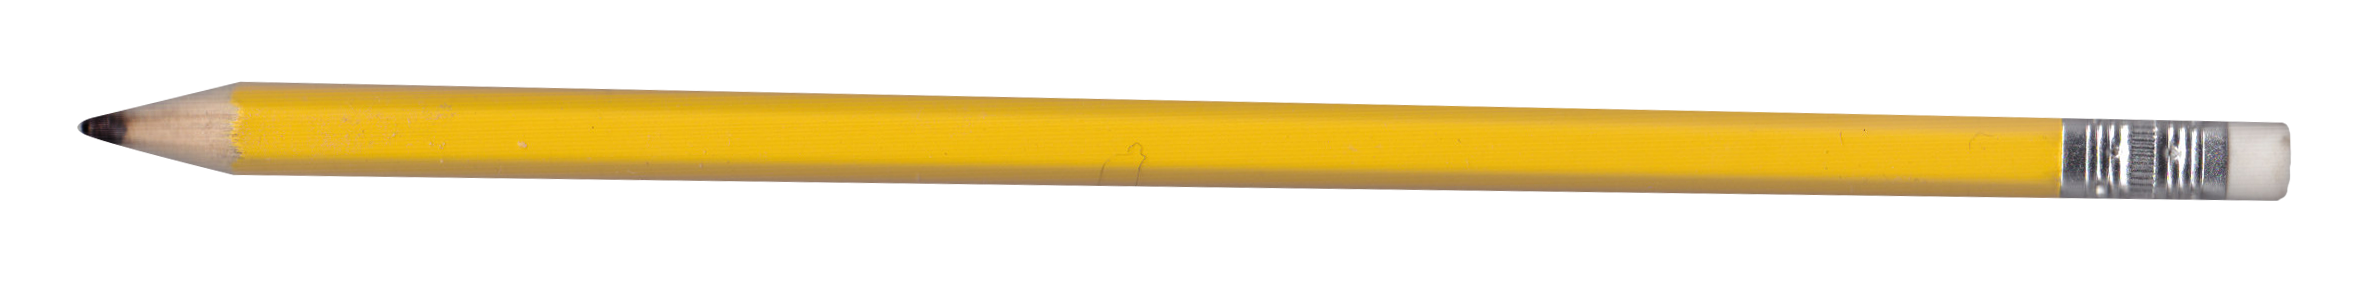 yellow pencil clipart - photo #44